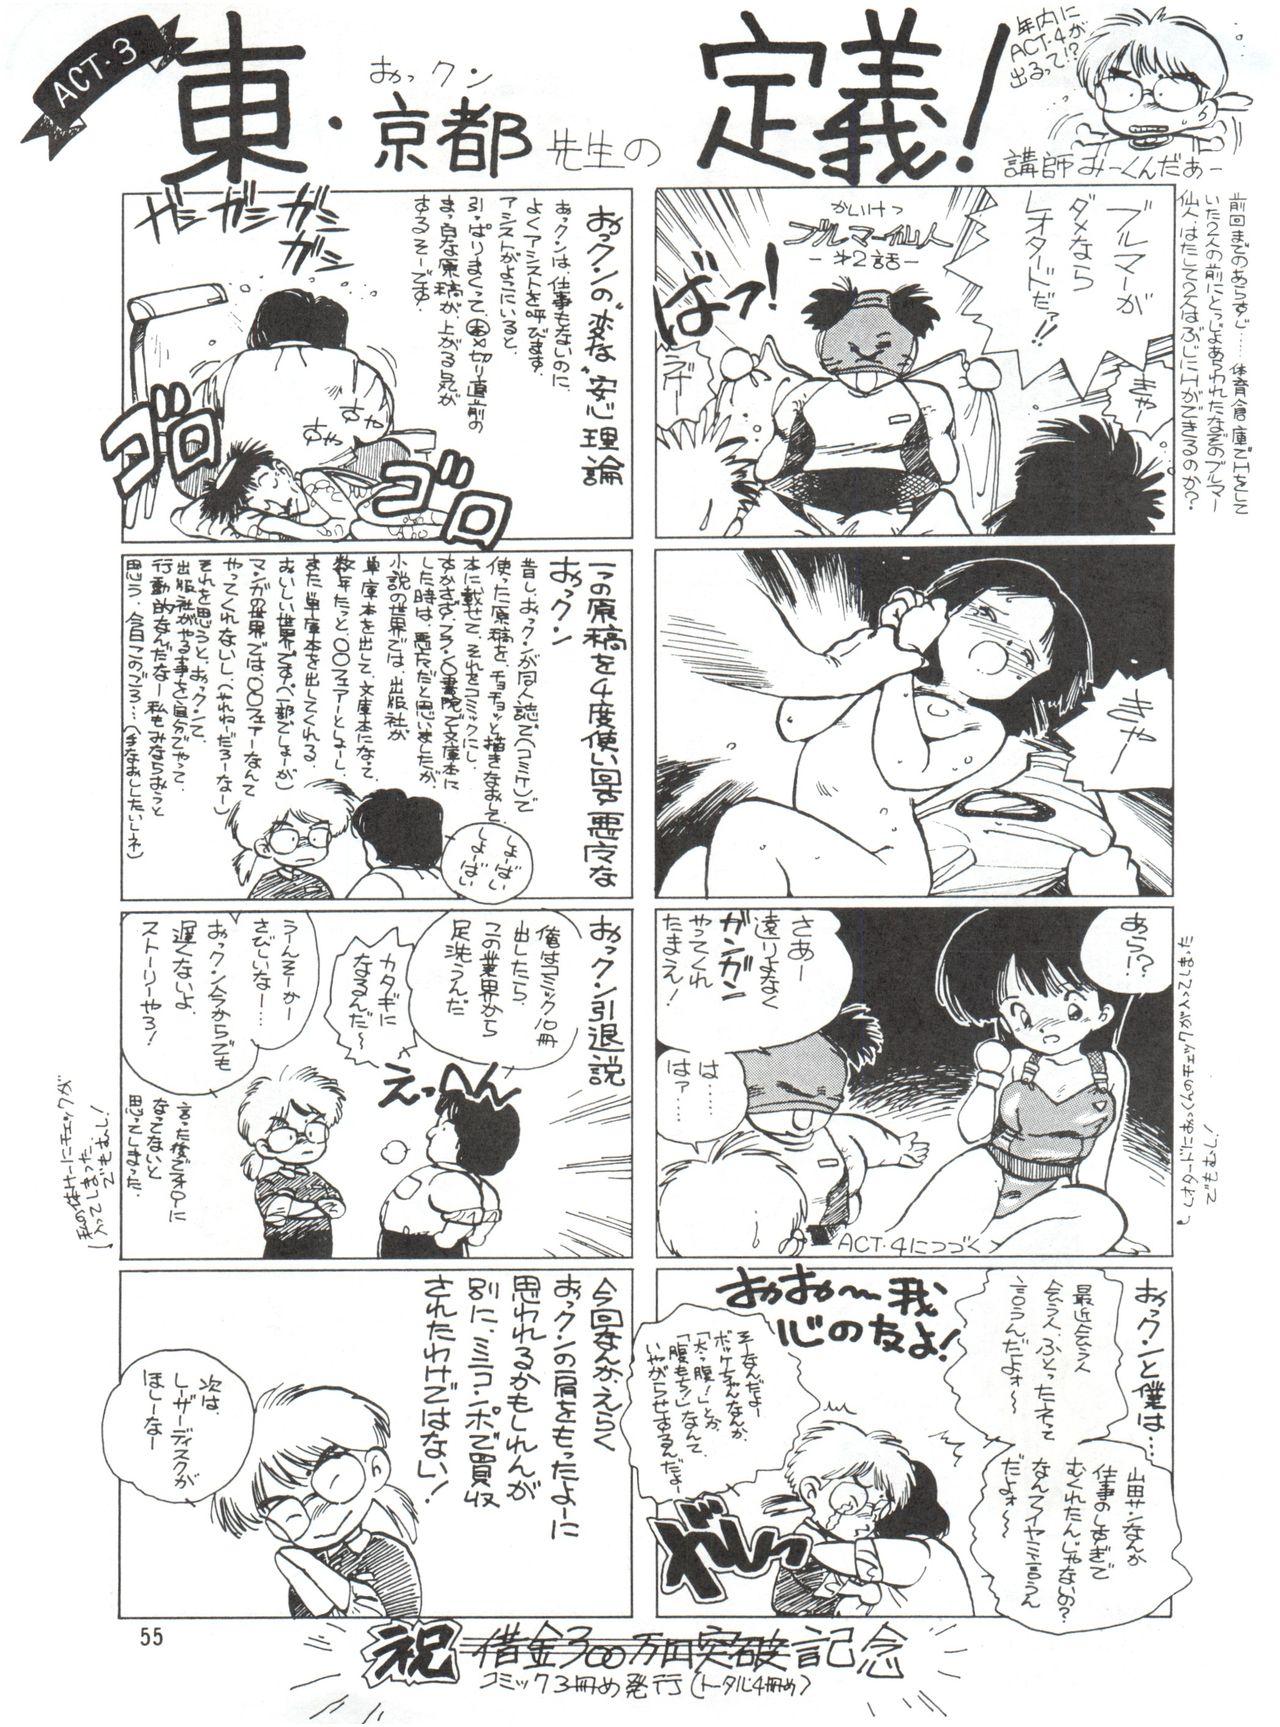 Meika Azumaya vol.2 56